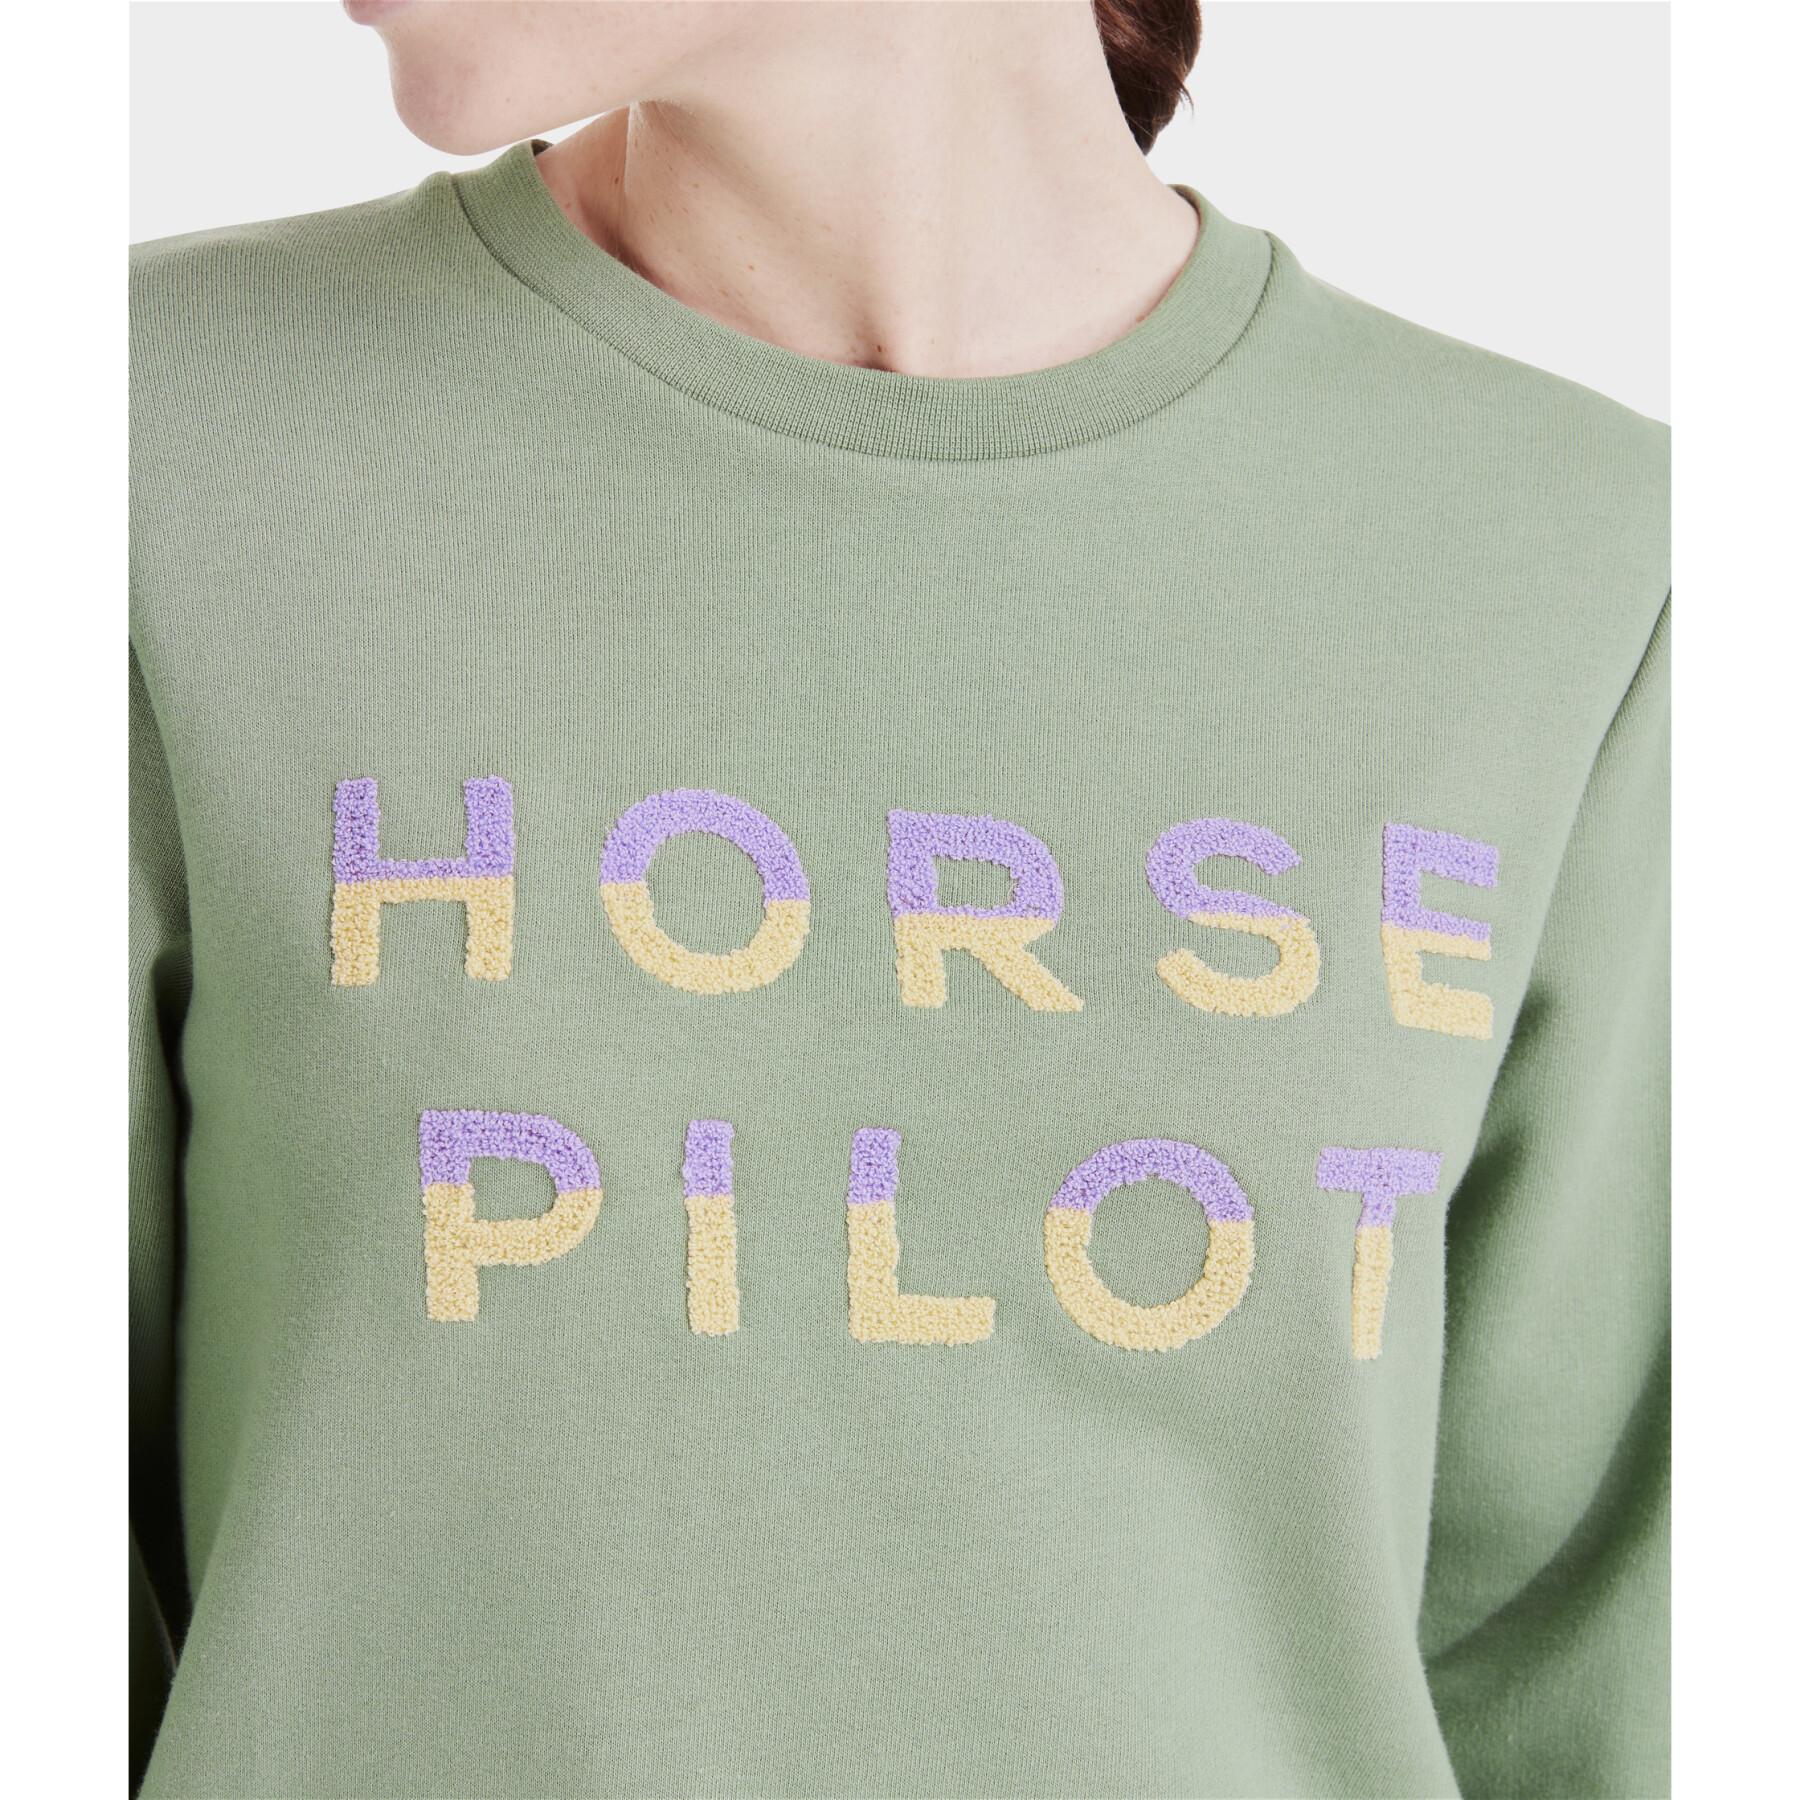 Sweatshirt damesrit Horse Pilot Team